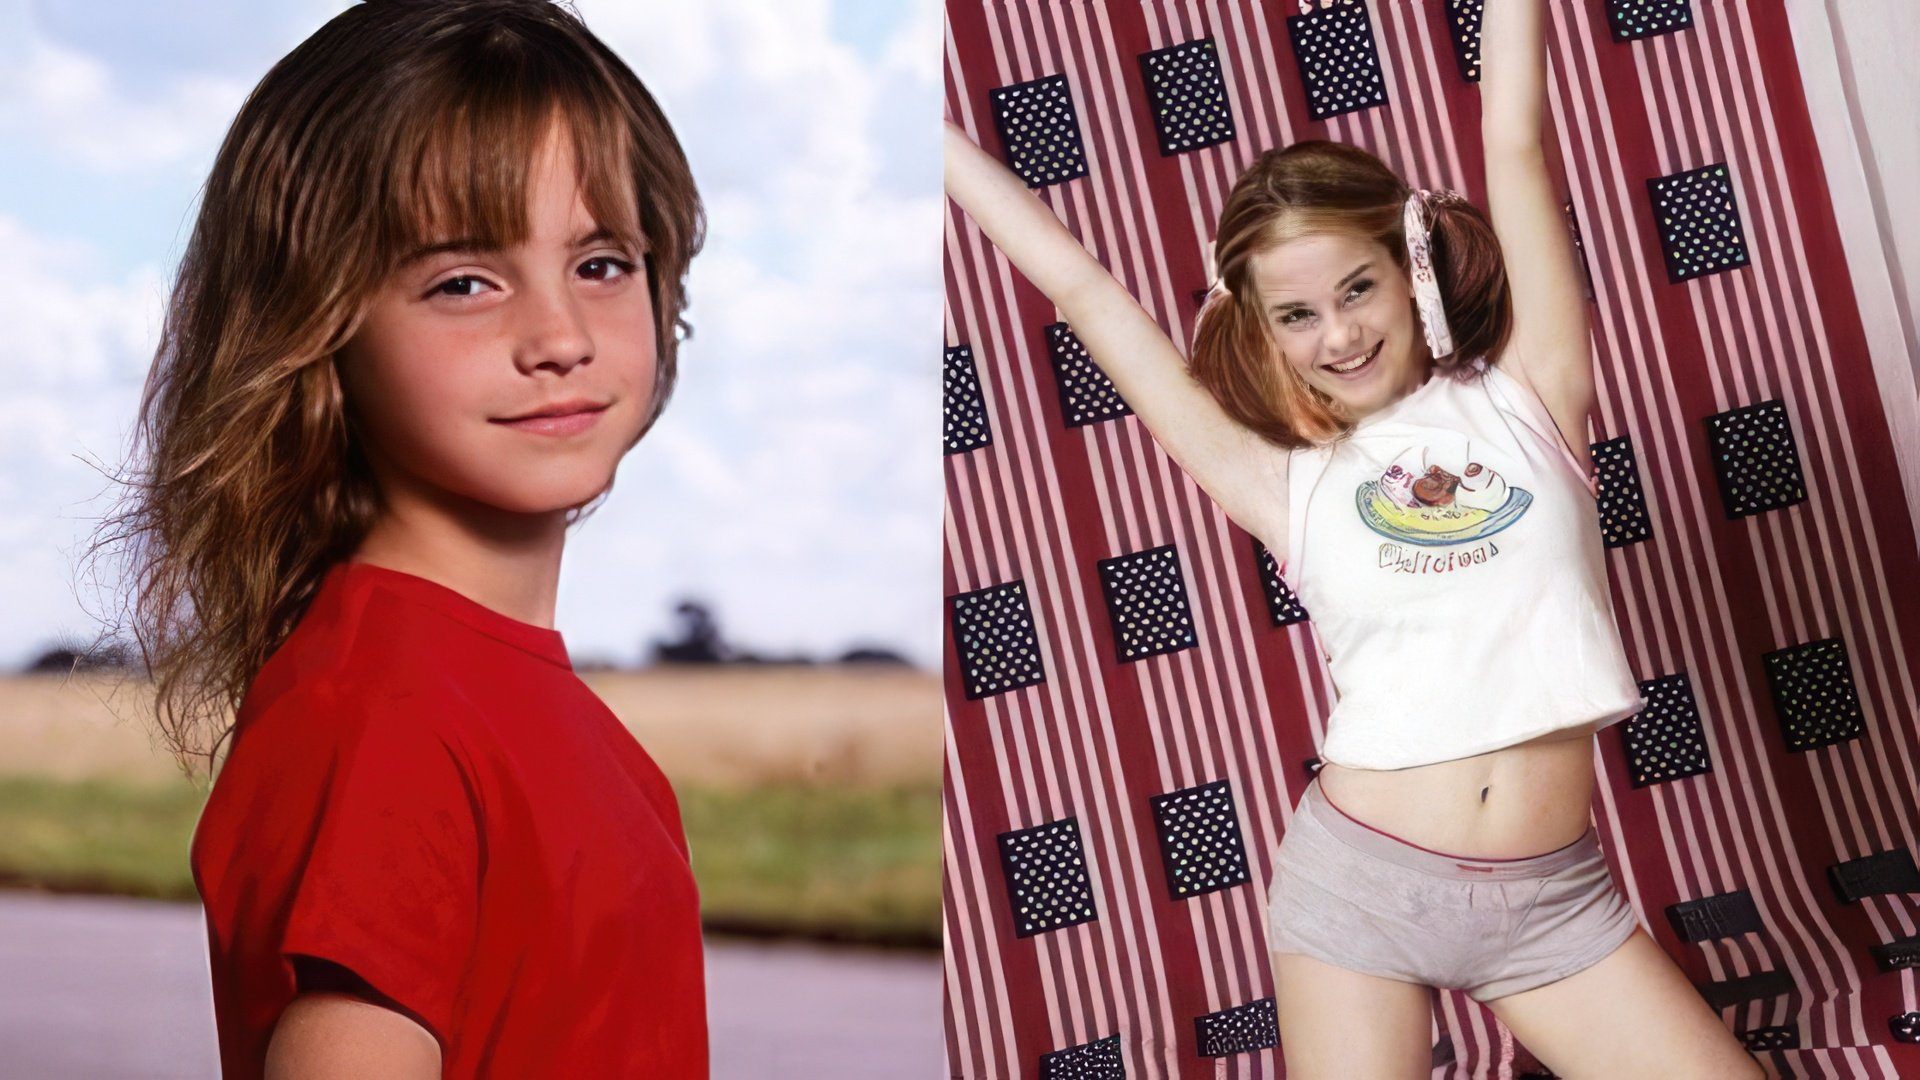 Emma Watson's childhood photos